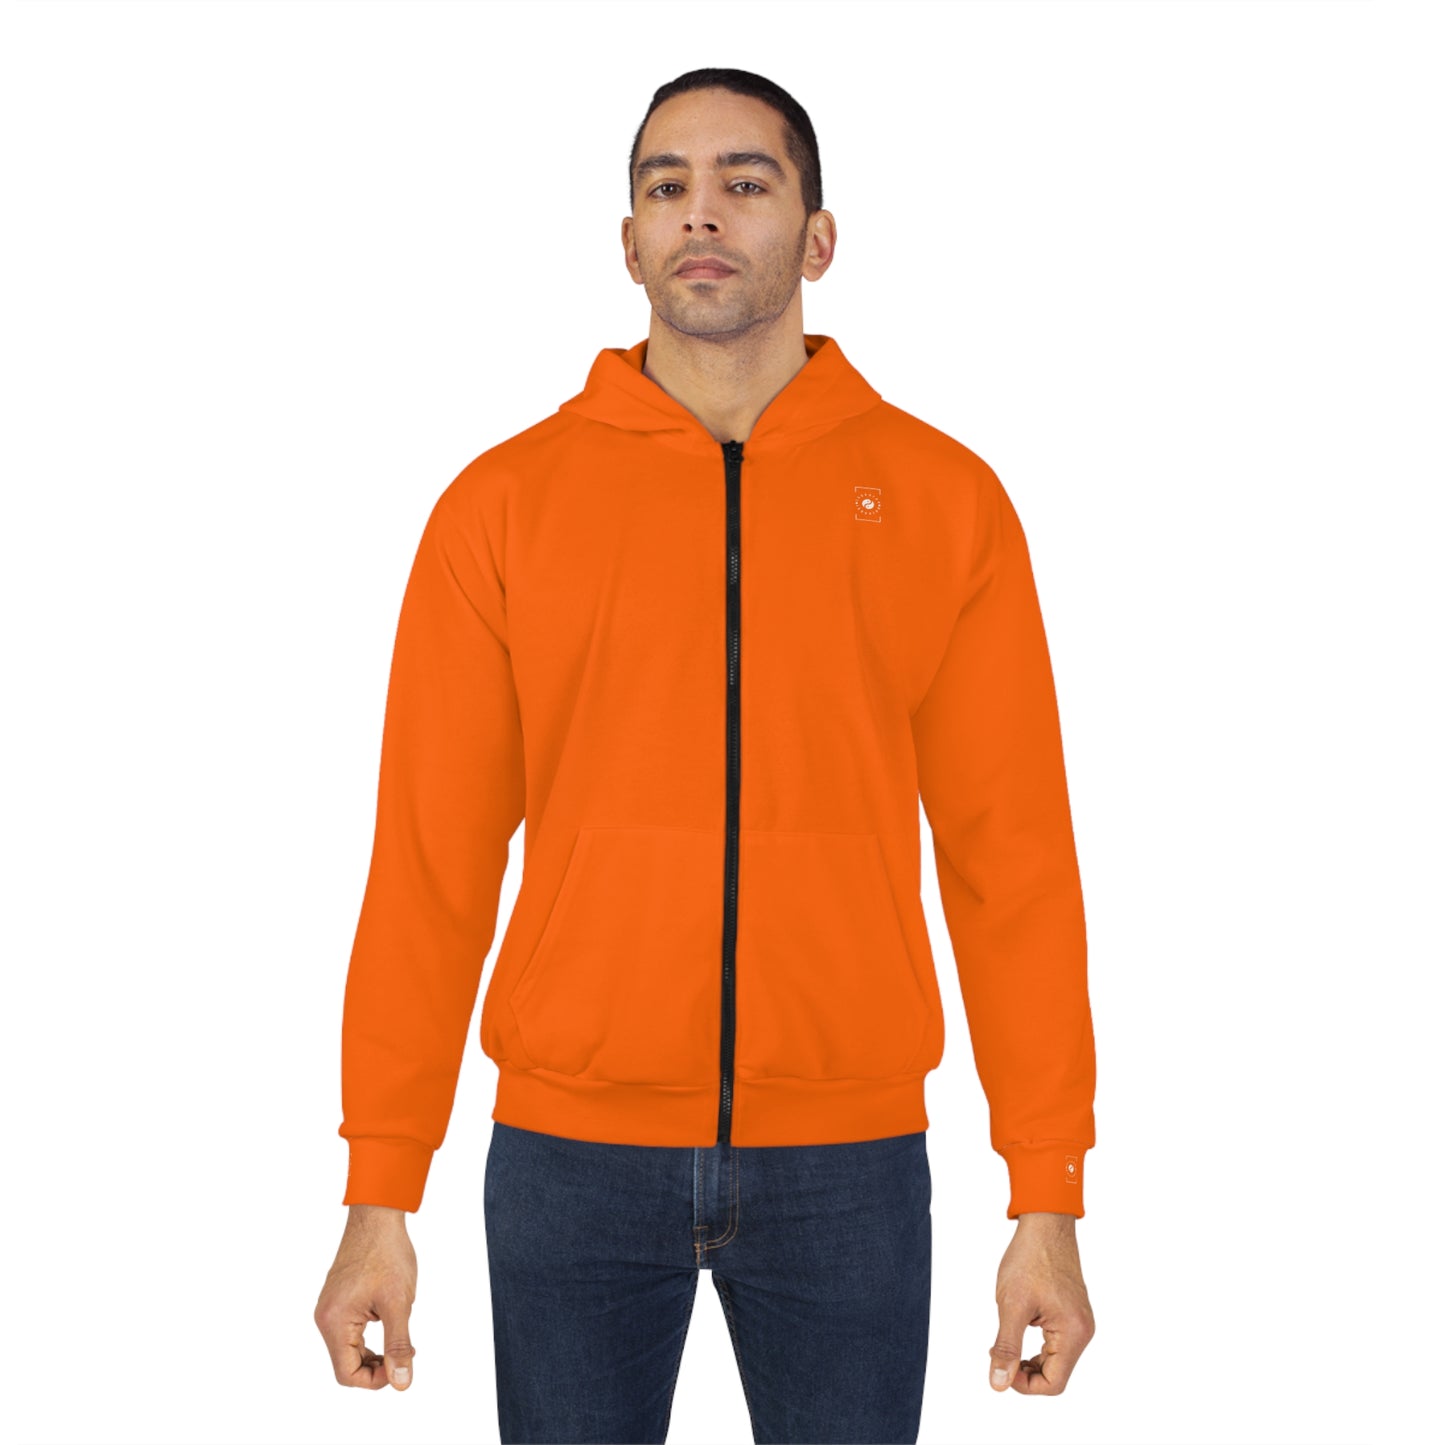 Neon Orange #FF6700 - Zip Hoodie